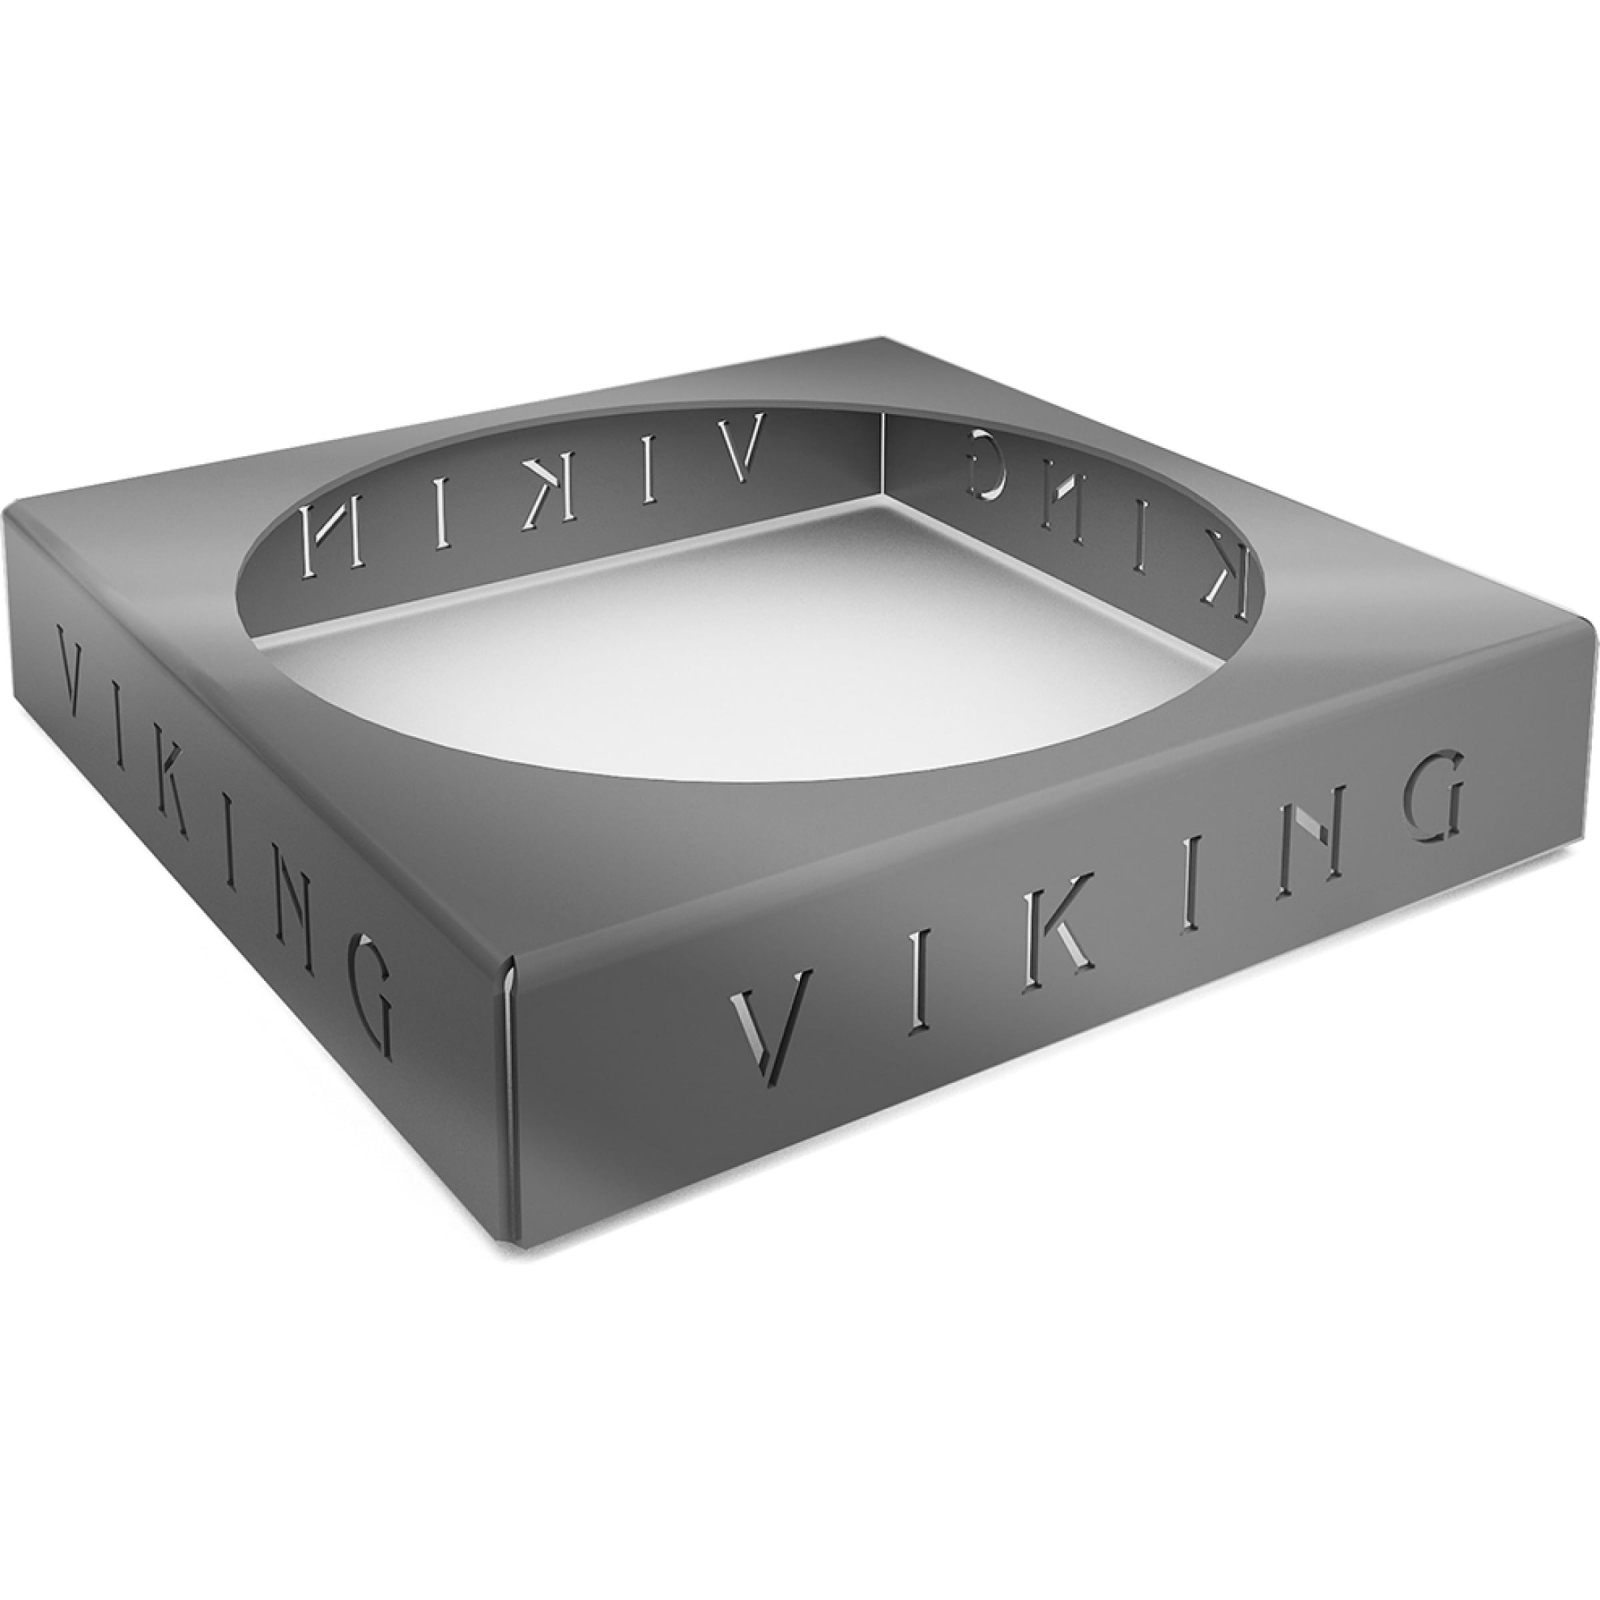 Подставка под казан Grillux для VikinG подставка под казан grillux для viking